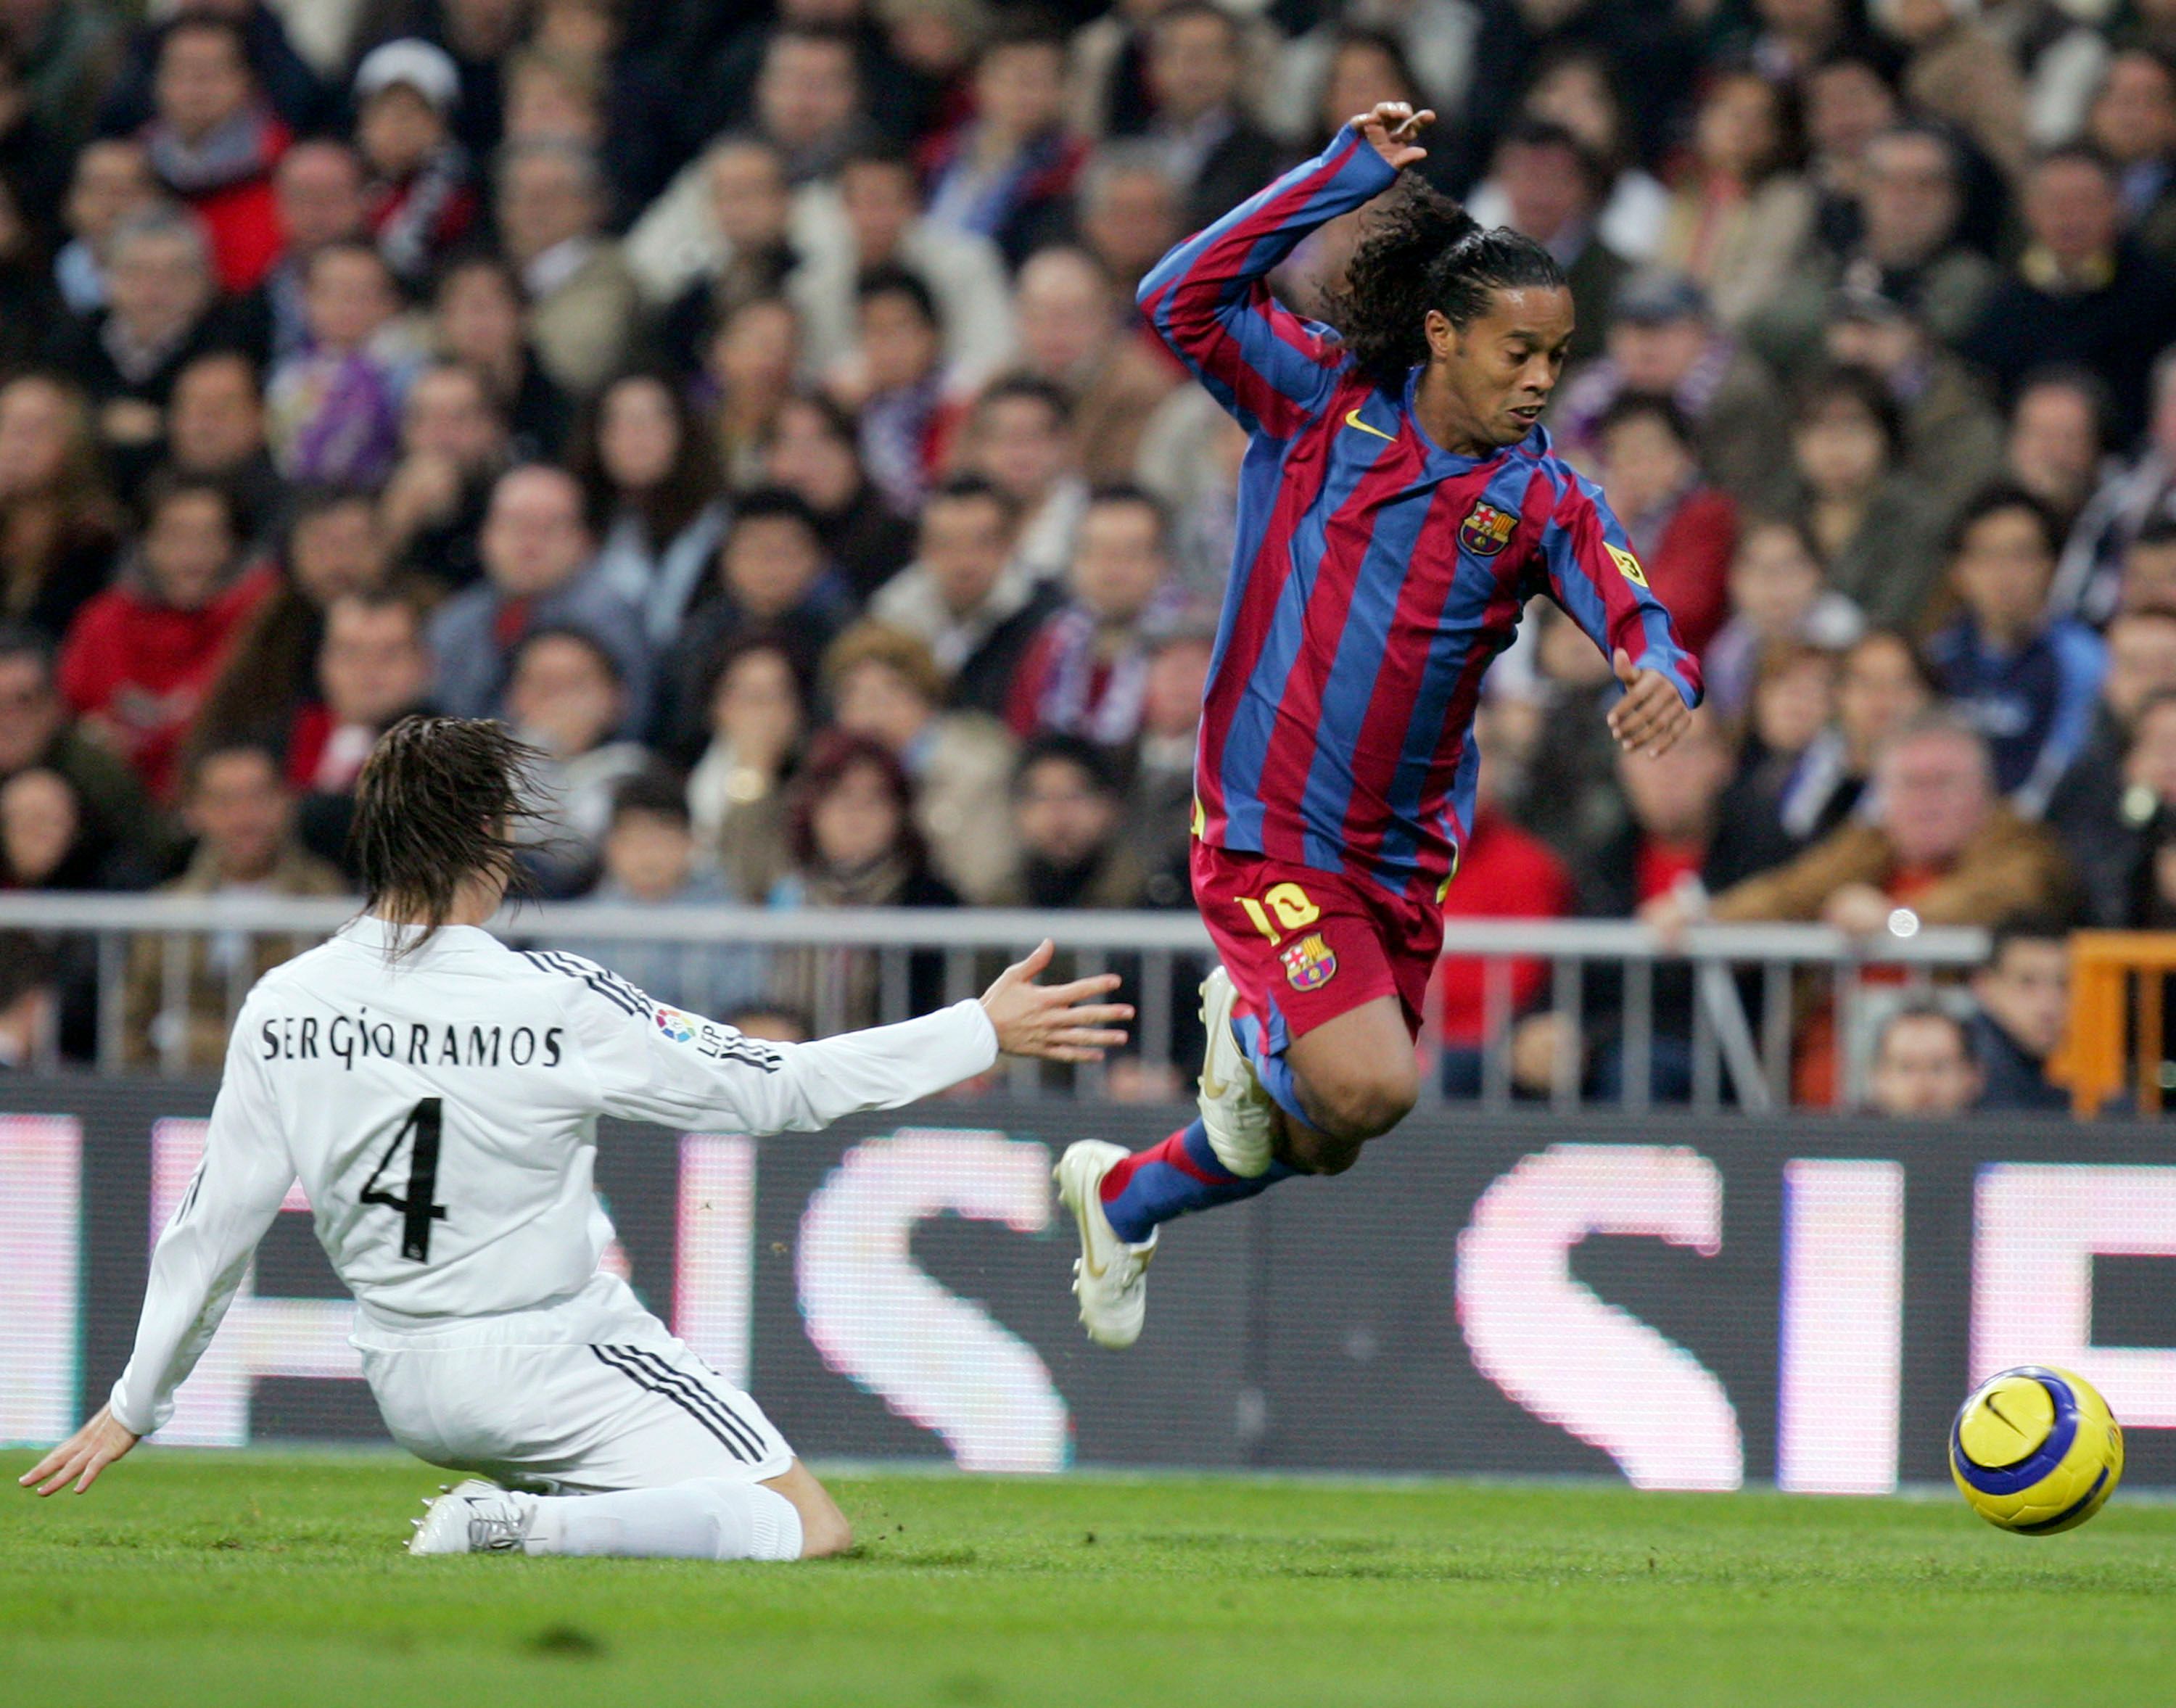 Sergio Ramos attempts to tackle Ronaldinho